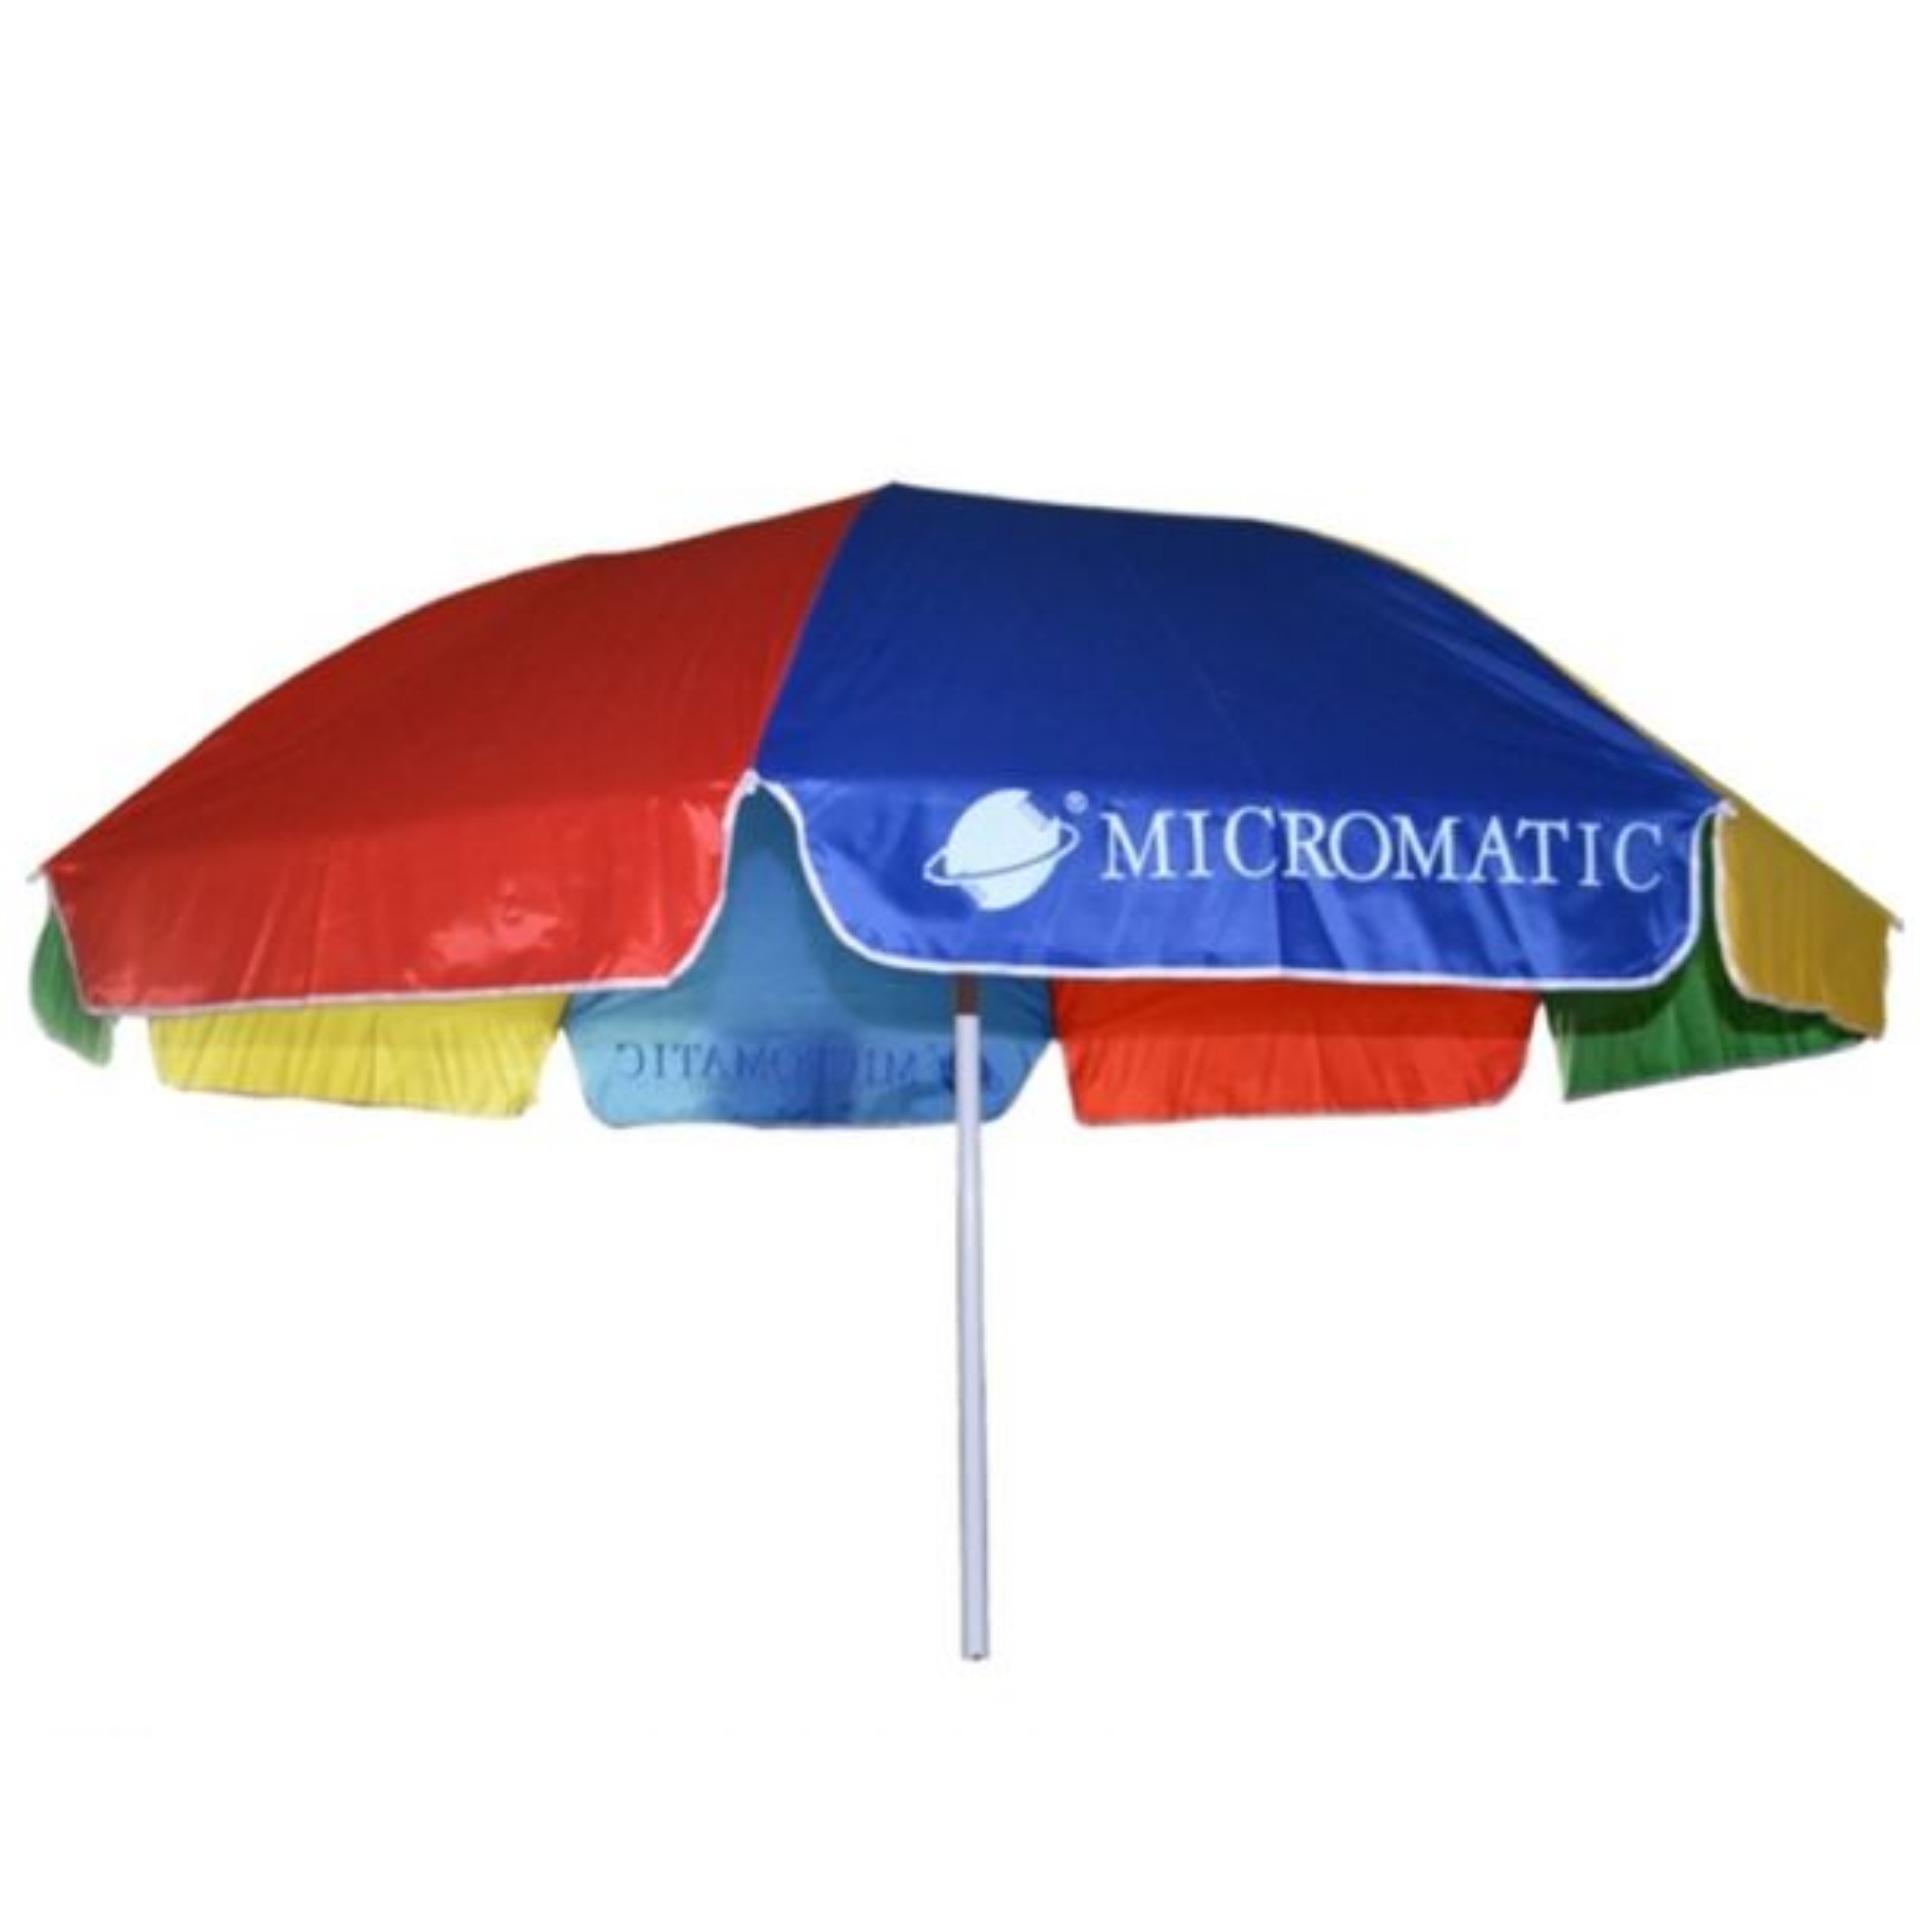 big umbrella for sale